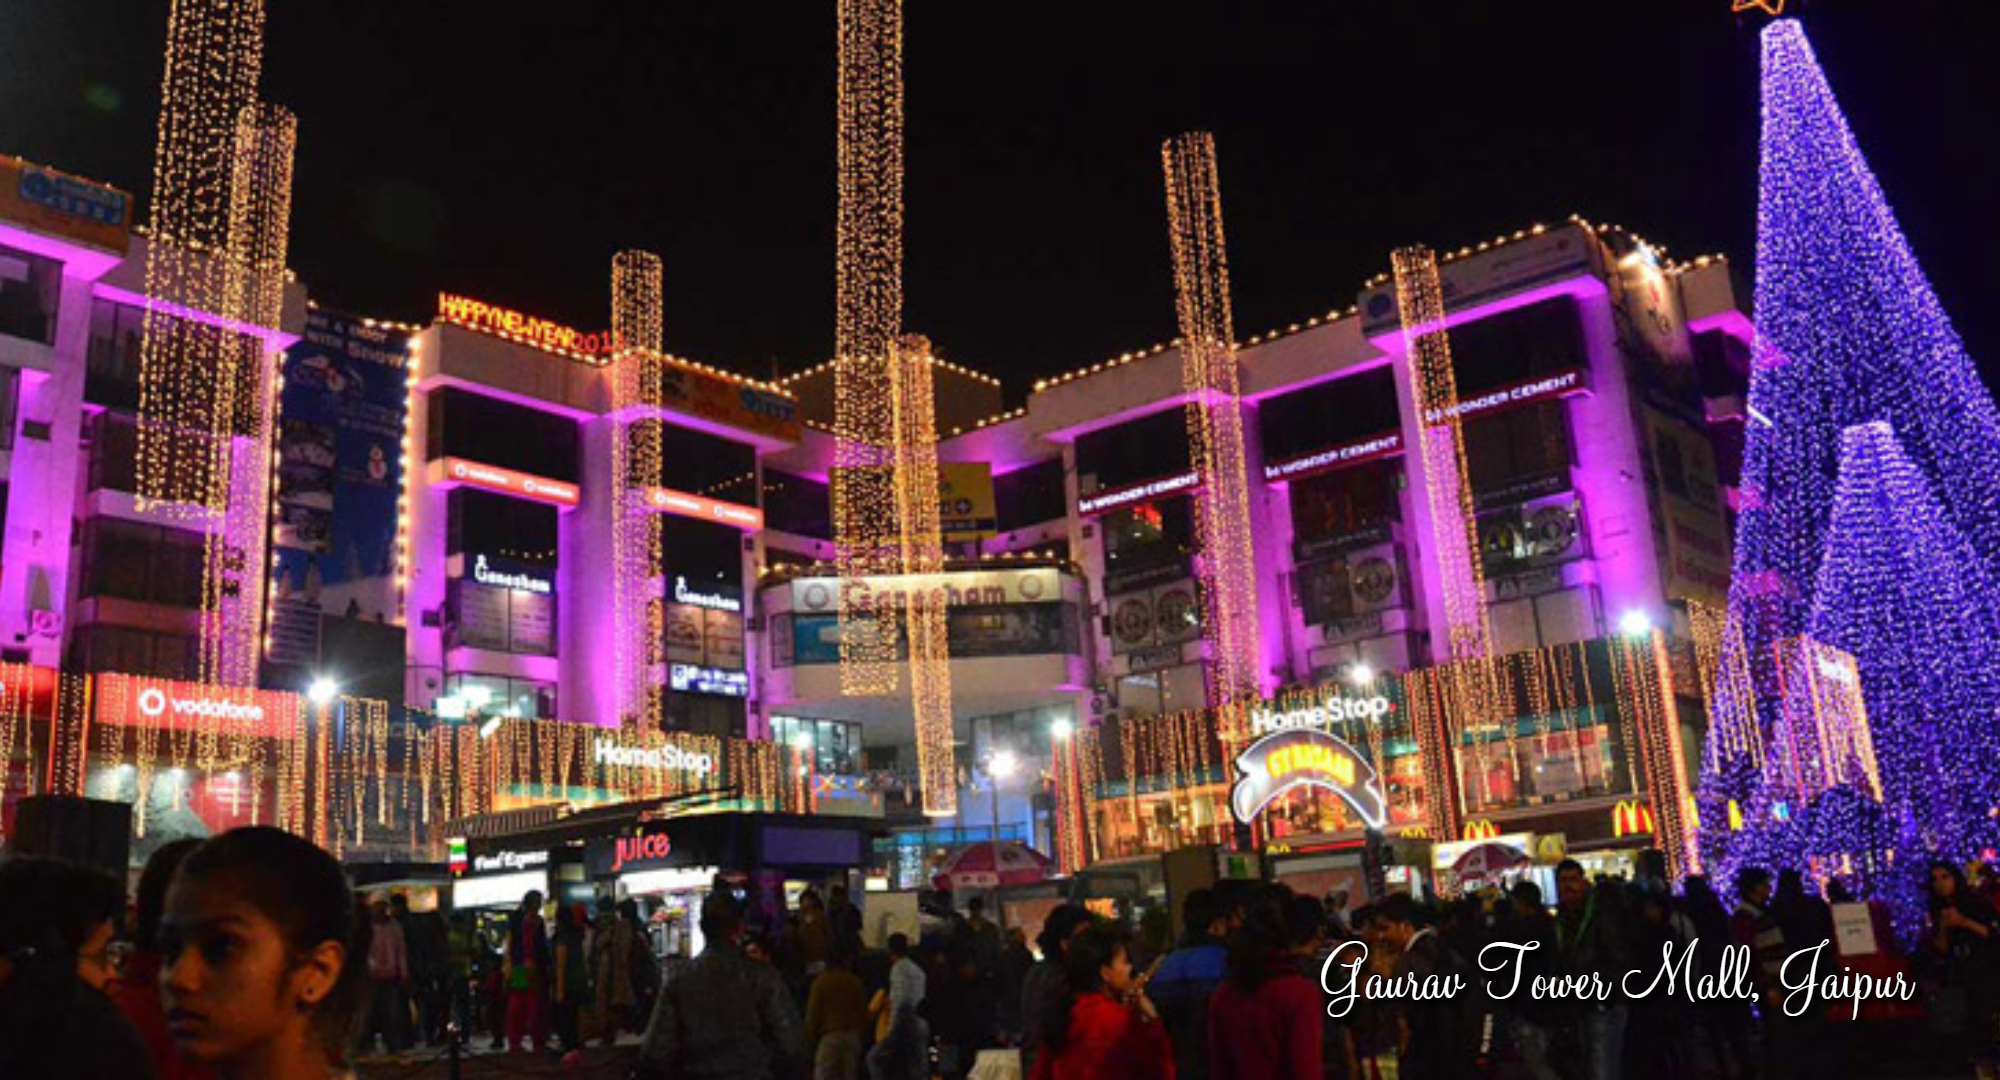 gaurav tower mall jaipur, top 12 shopping places in jaipur, jaipur shopping places, jaipur shopping markets, jodhpur cabs,